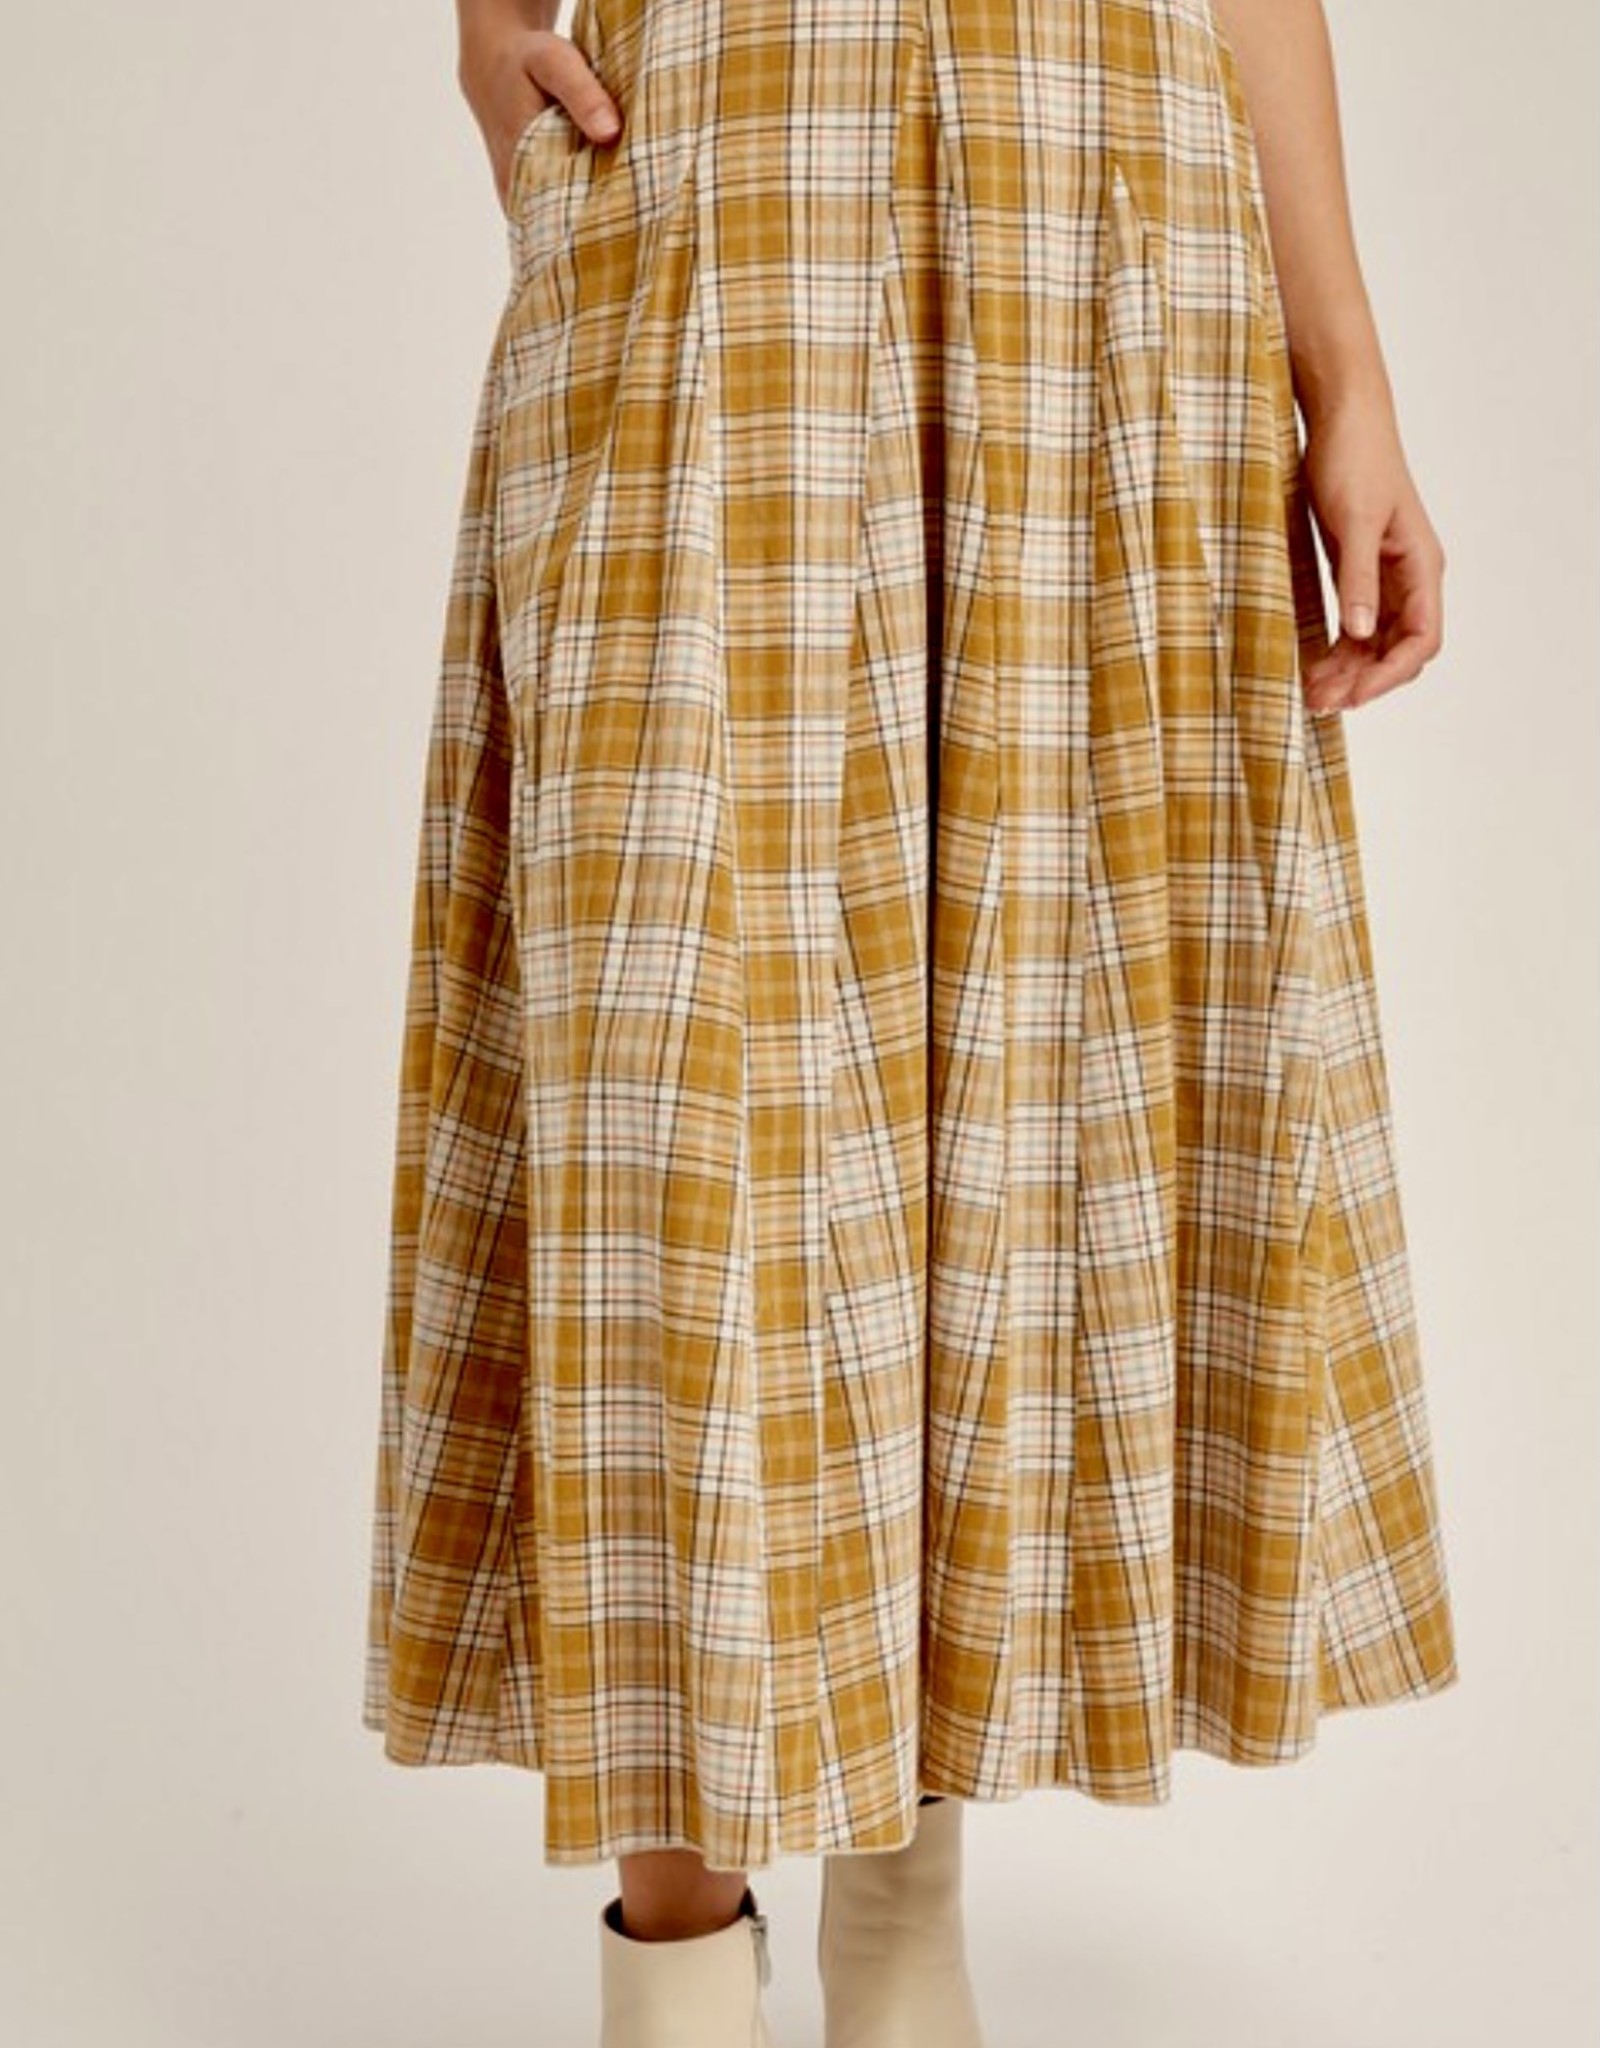 HUSH AUBREY plaid maxi skirt